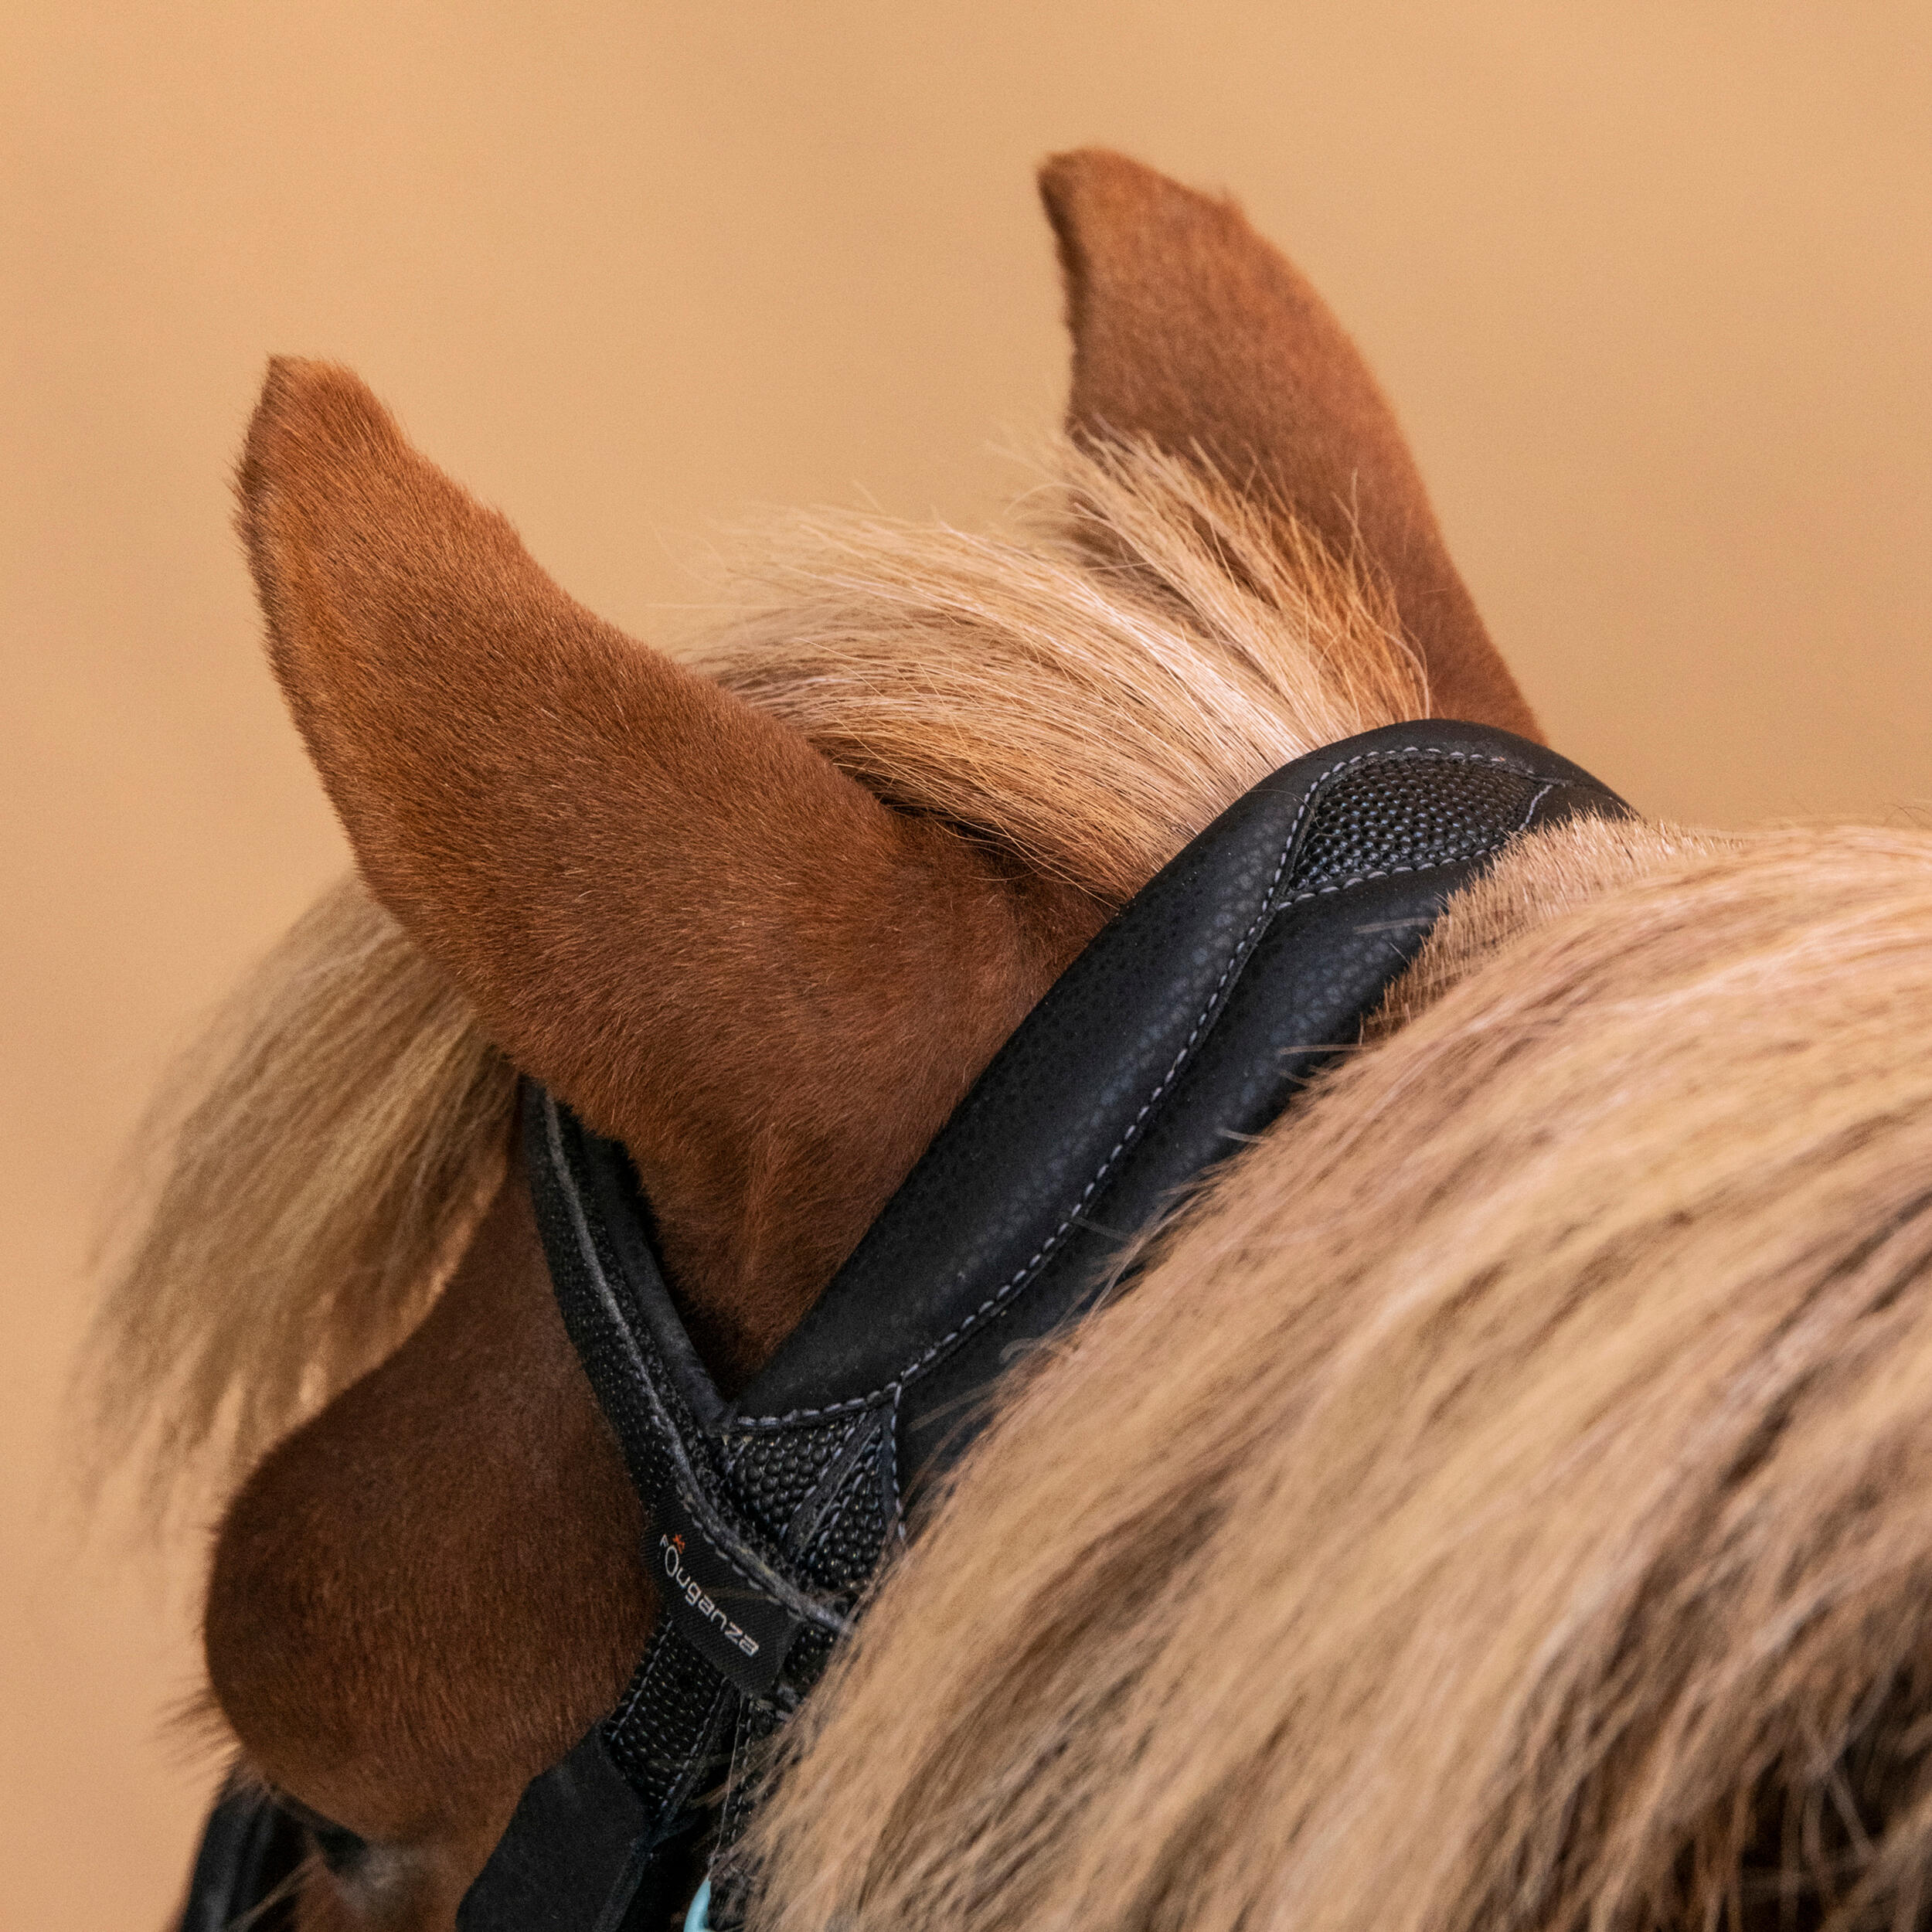 100 Horseback Riding Bridle + Reins for Pony - Black - FOUGANZA